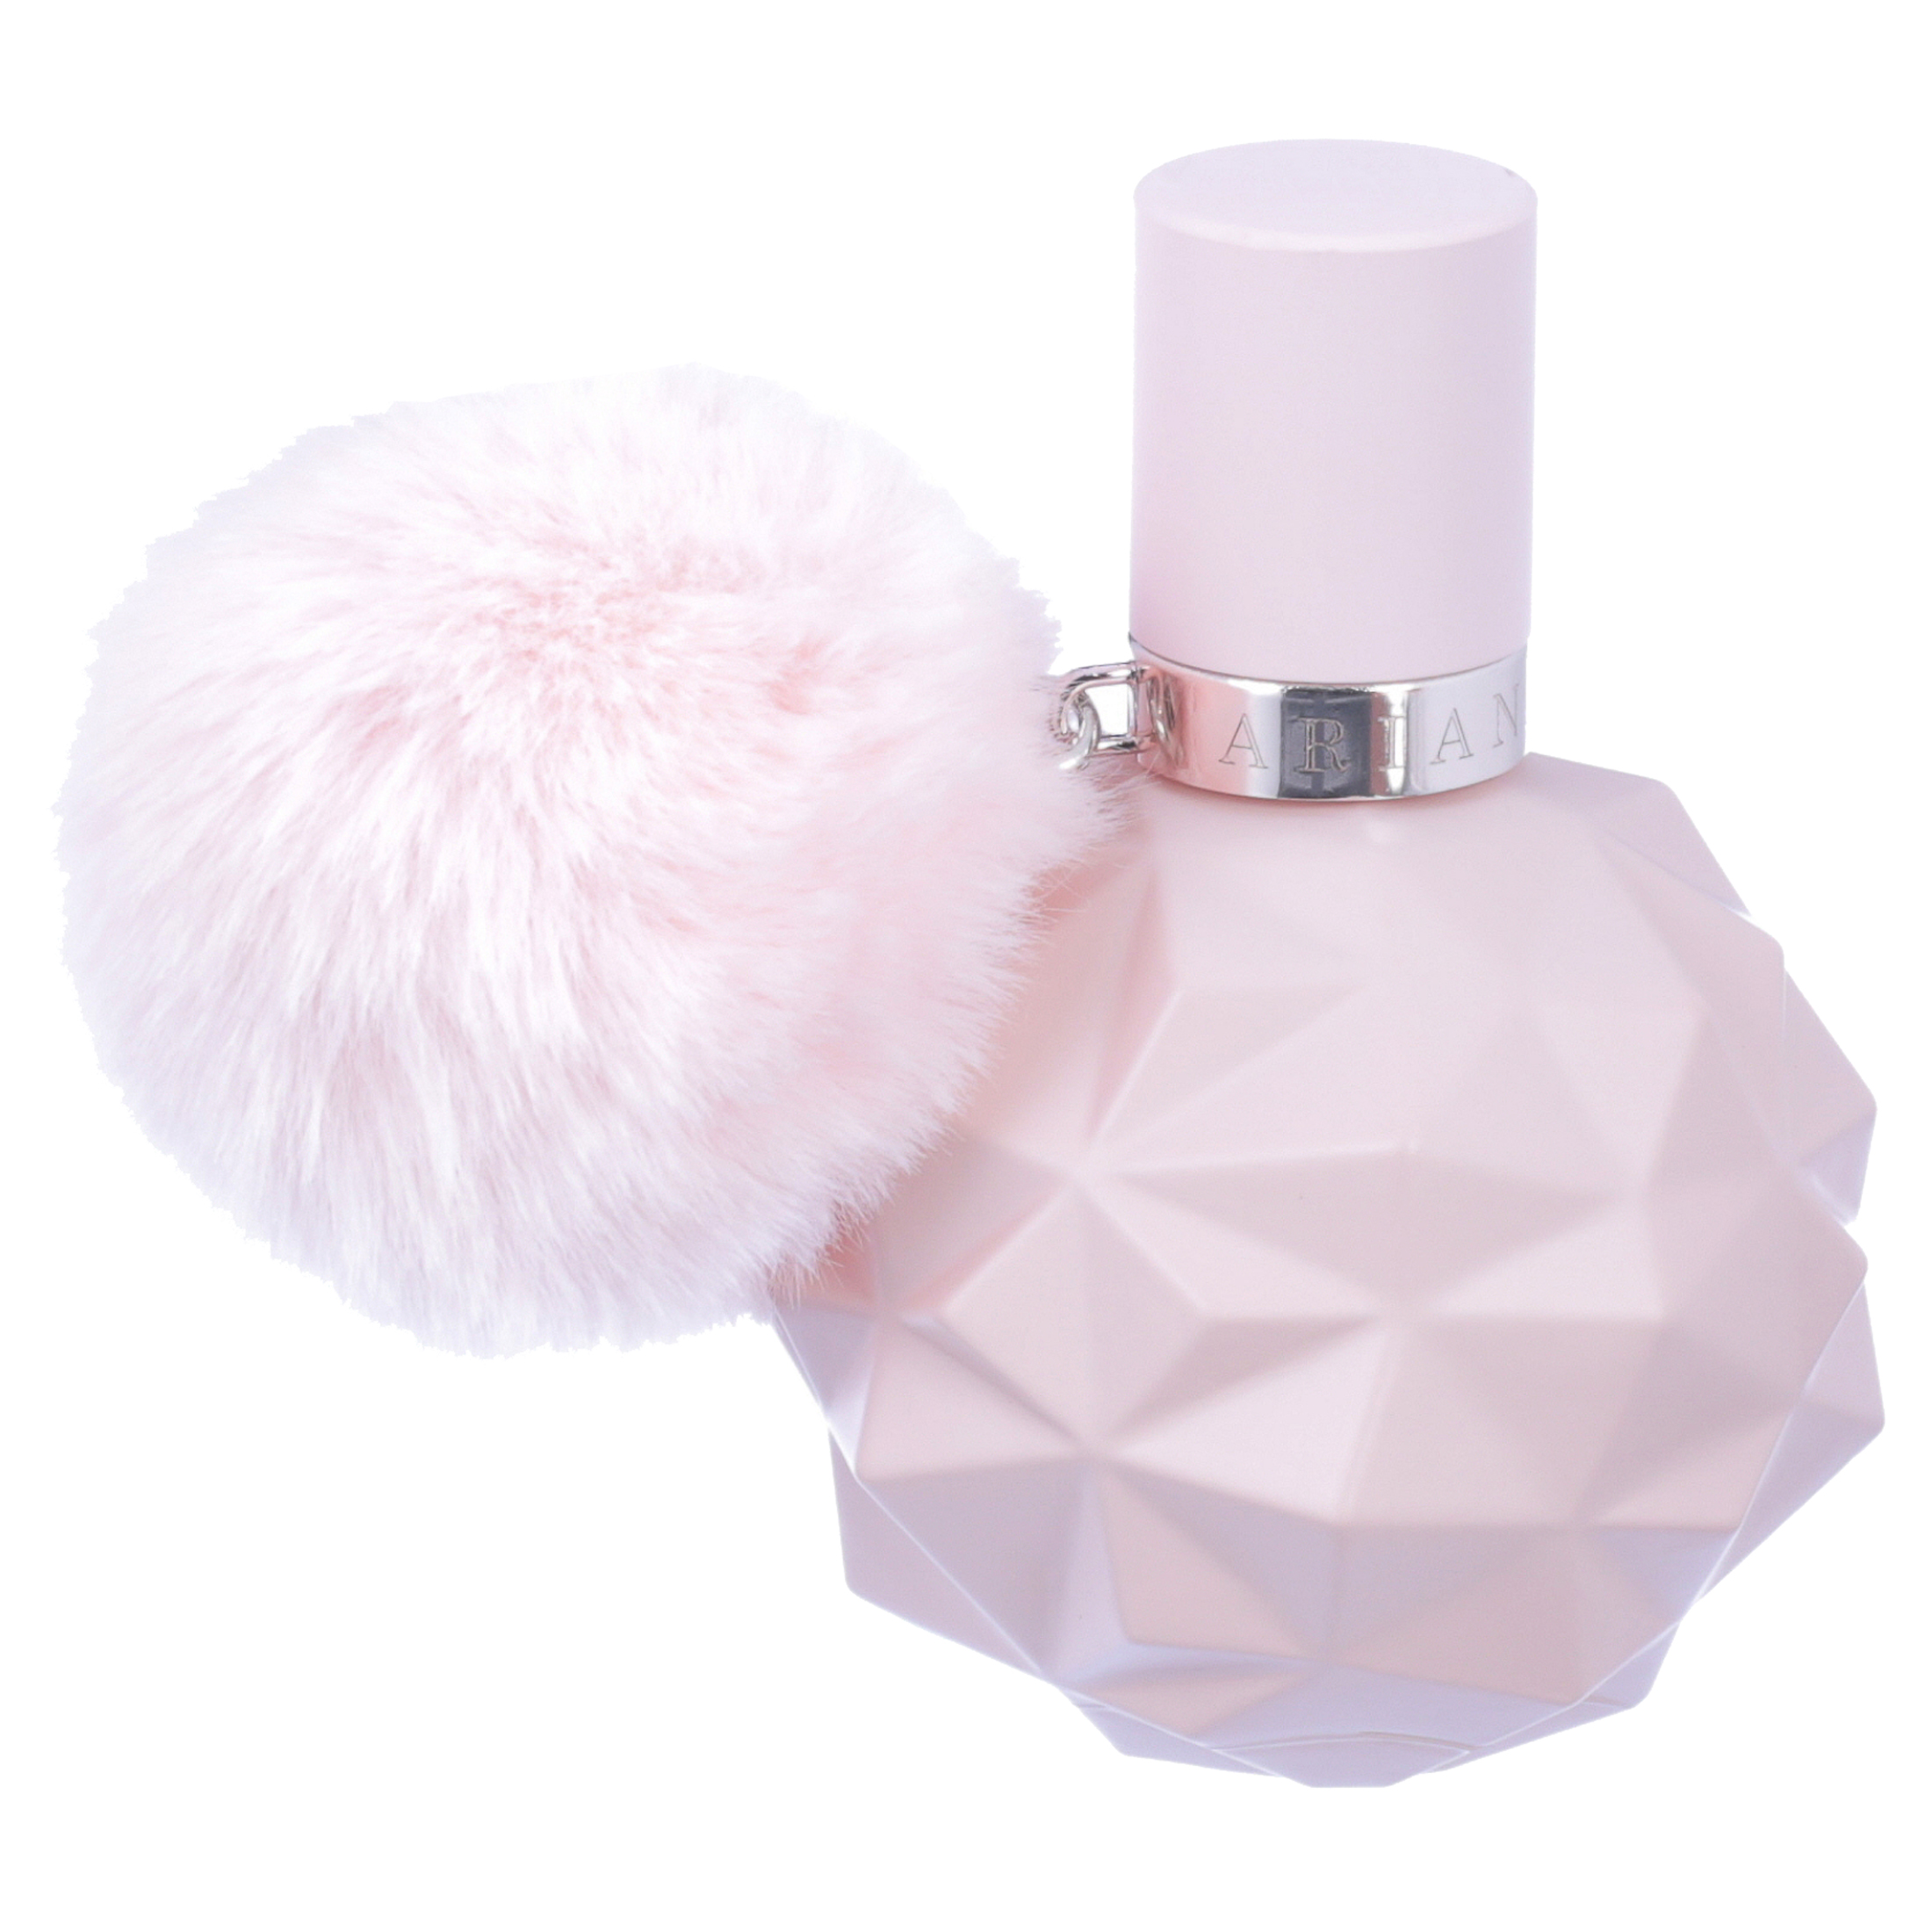 Ariana Grande Sweet Like Candy Eau de Parfum, Perfume for Women, 1 Oz - image 5 of 8